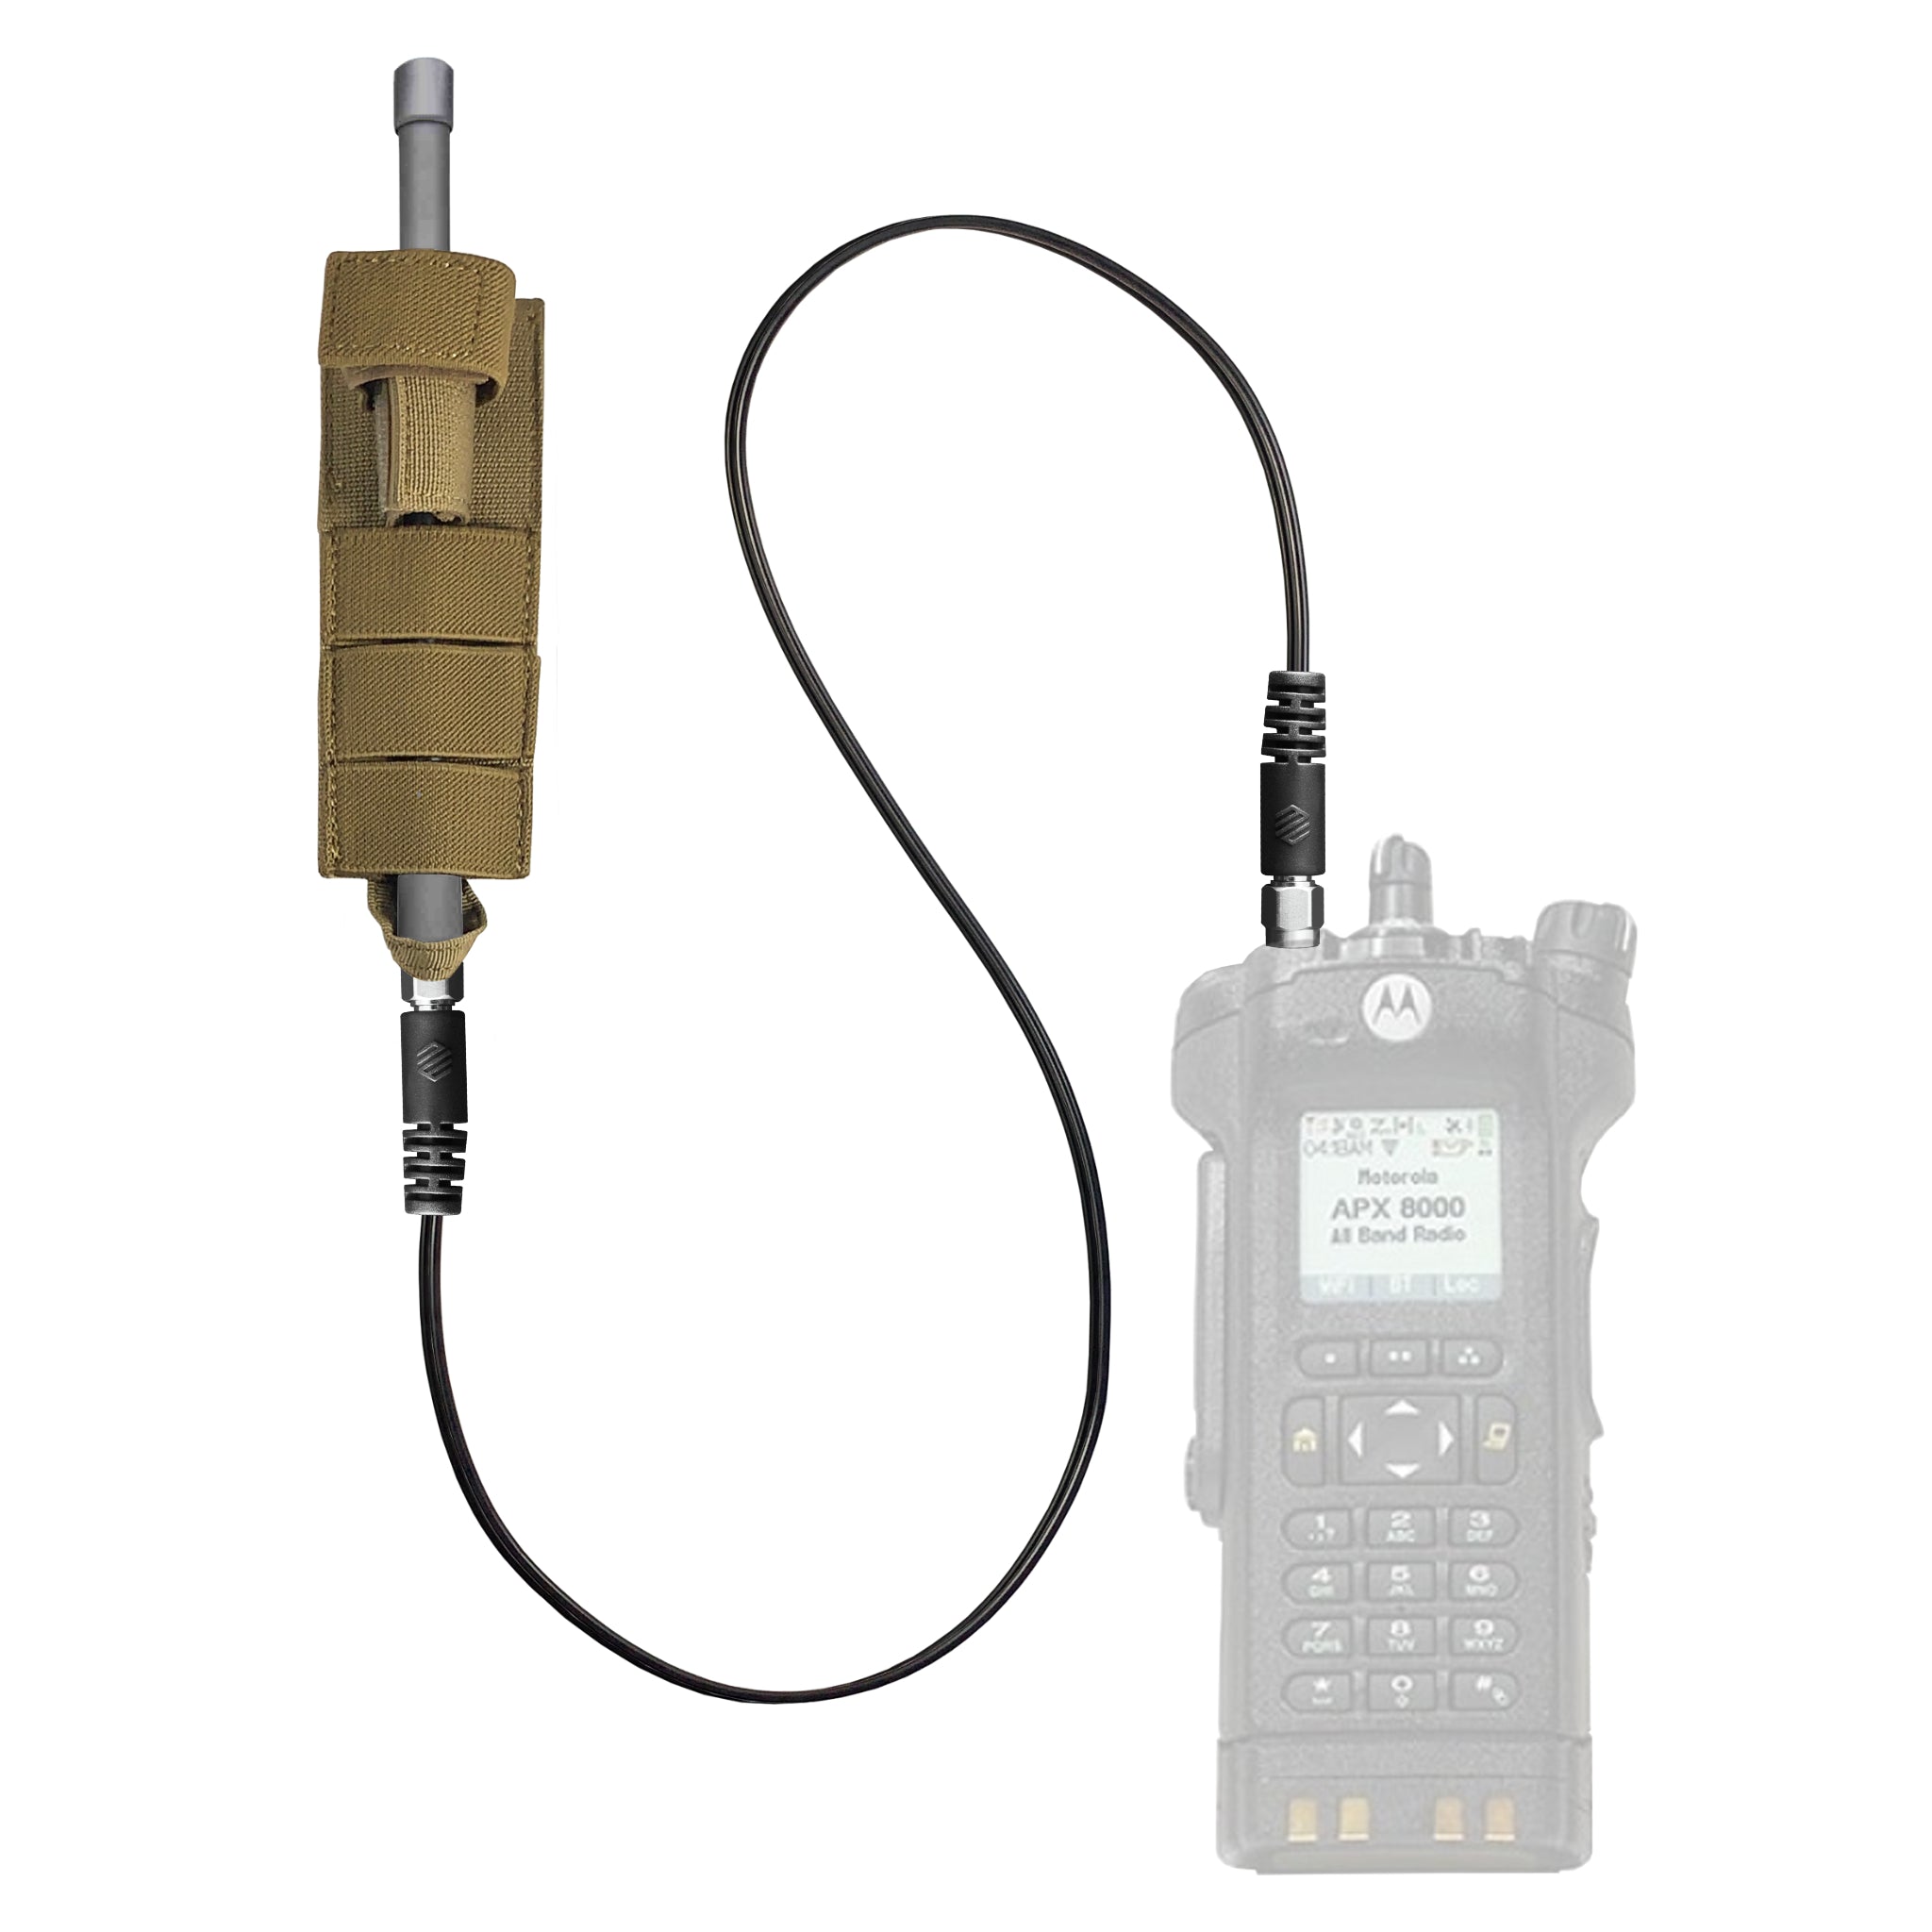 Tactical Antenna Relocation Kit(Black, Tan, or Green) - Motorola Series:  HT, XTS, XPR, APX(APEX), MOTOTRBO & More